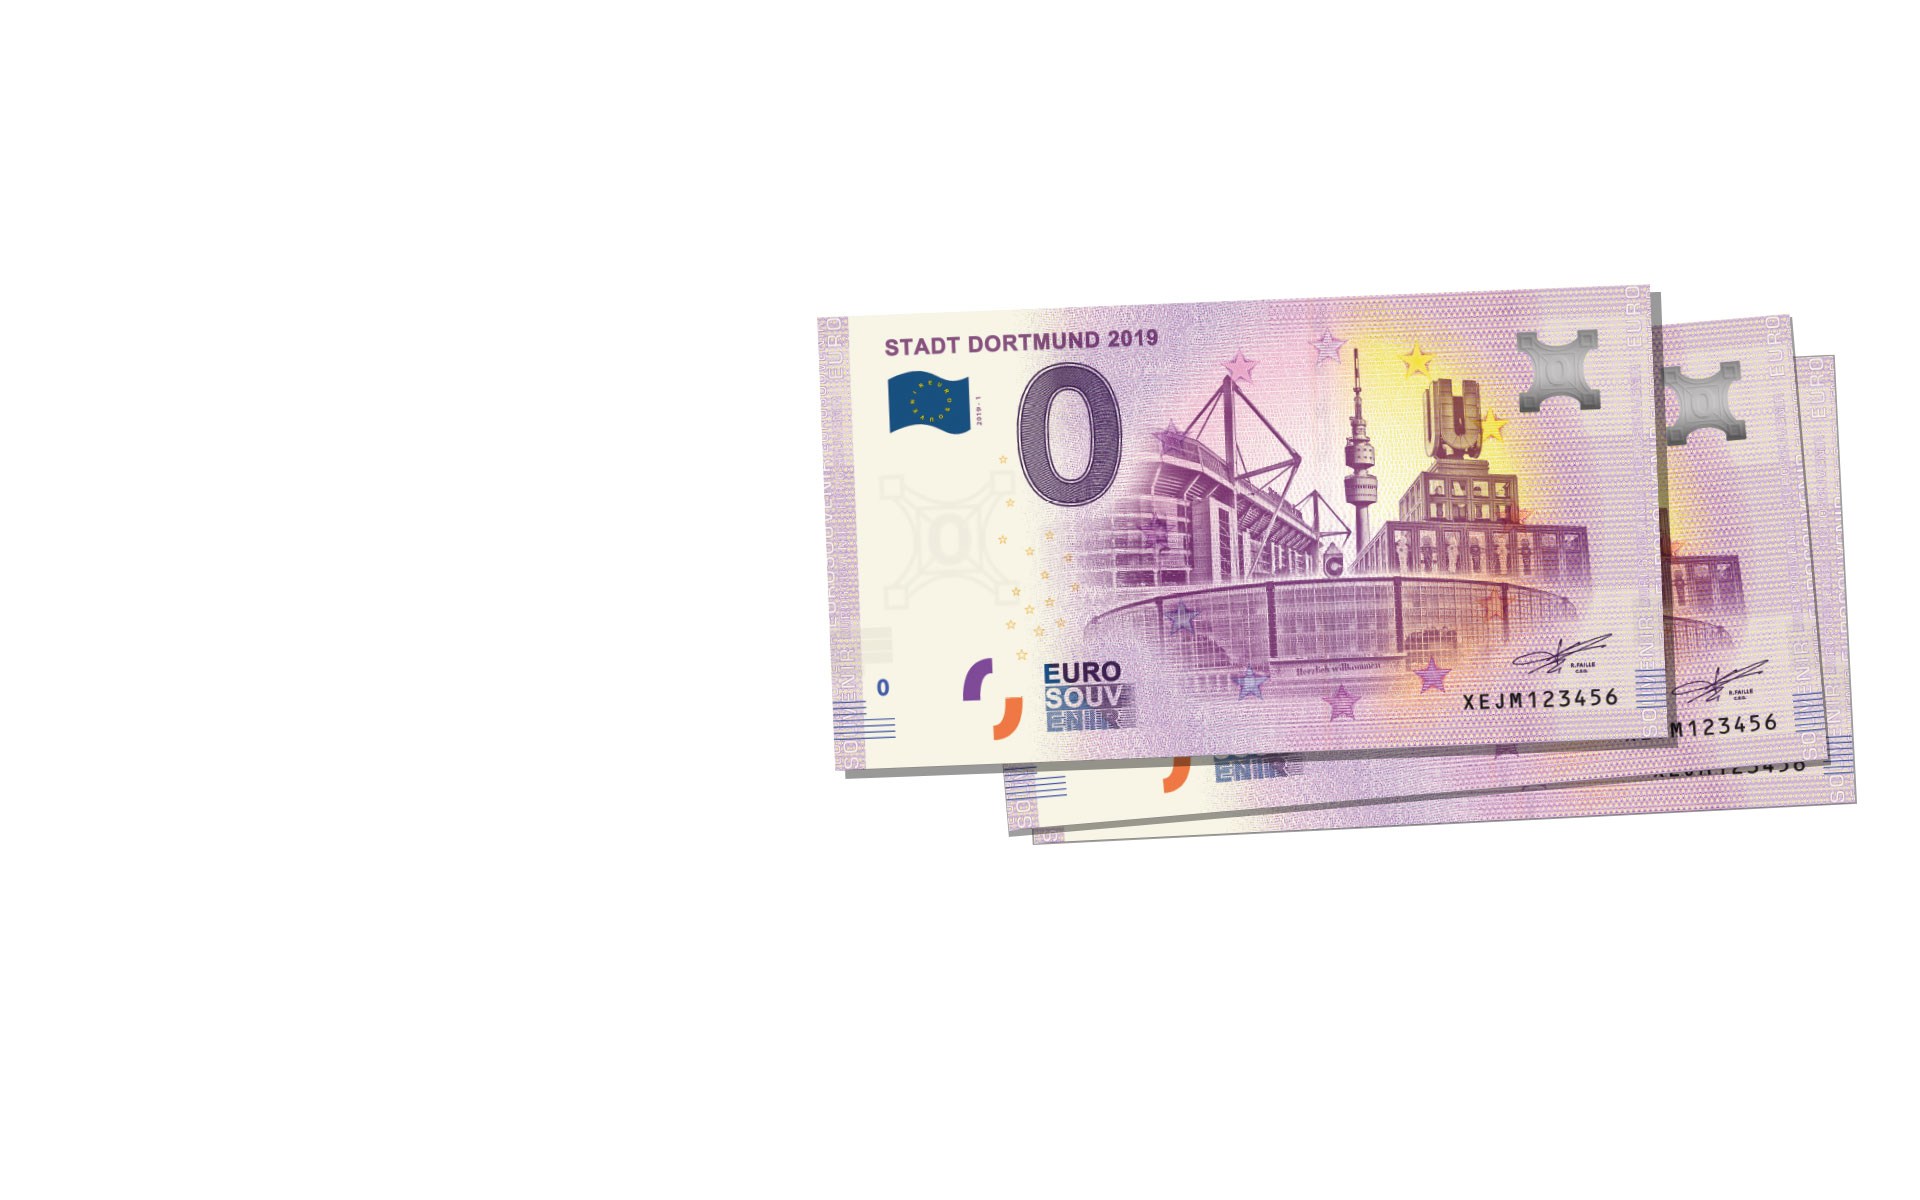 The 0-Euro-bank note Edition Dortmund